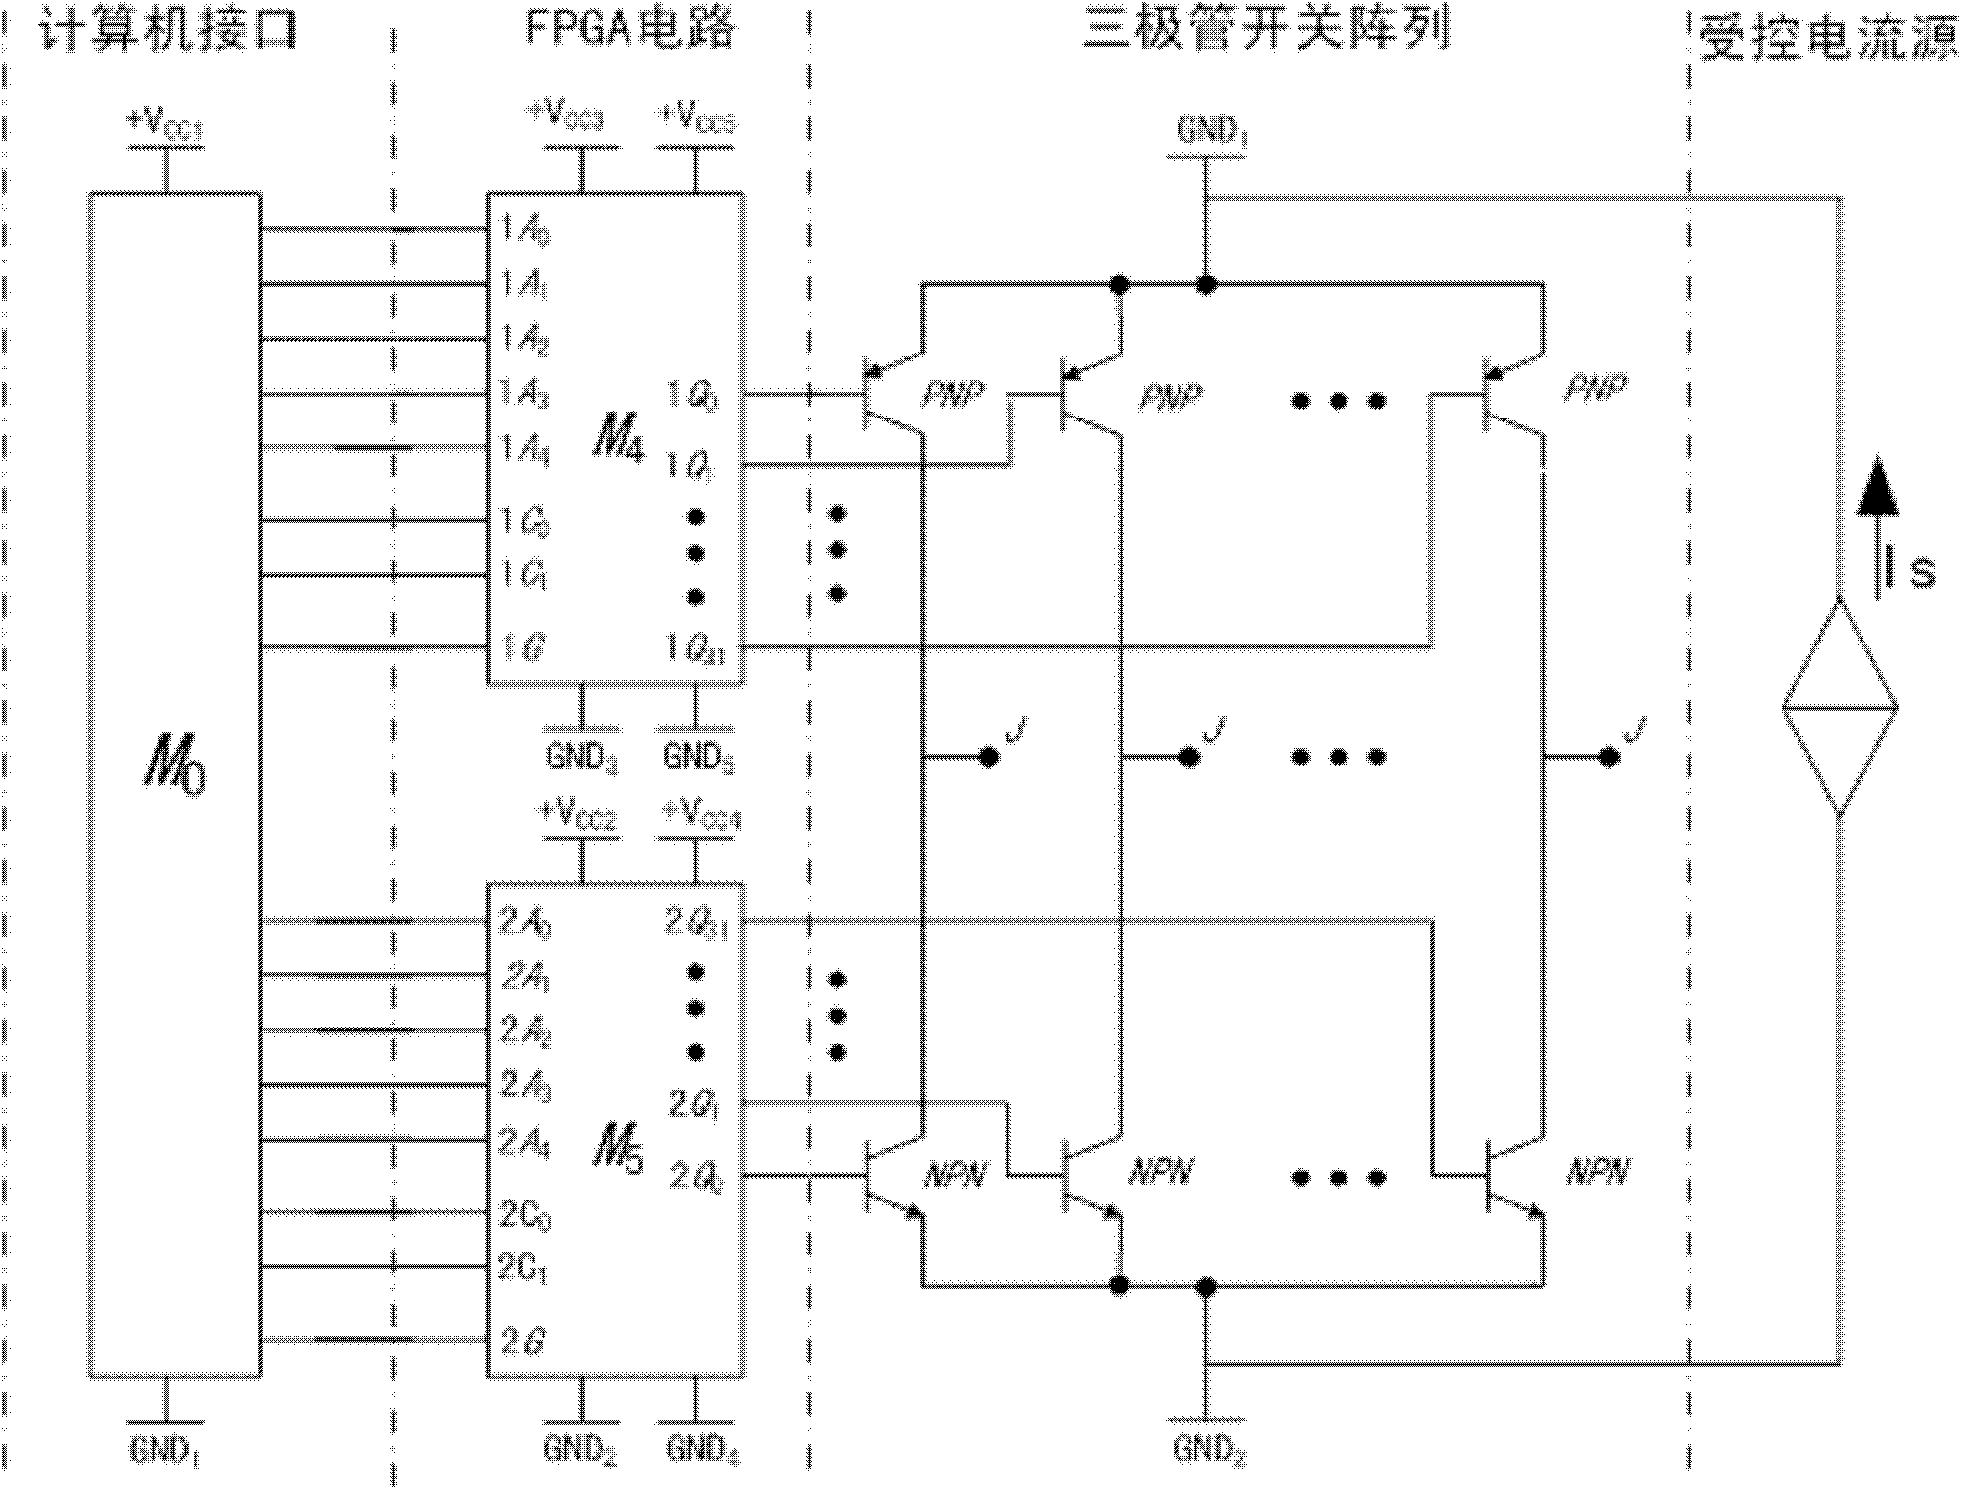 Circuit board testing system